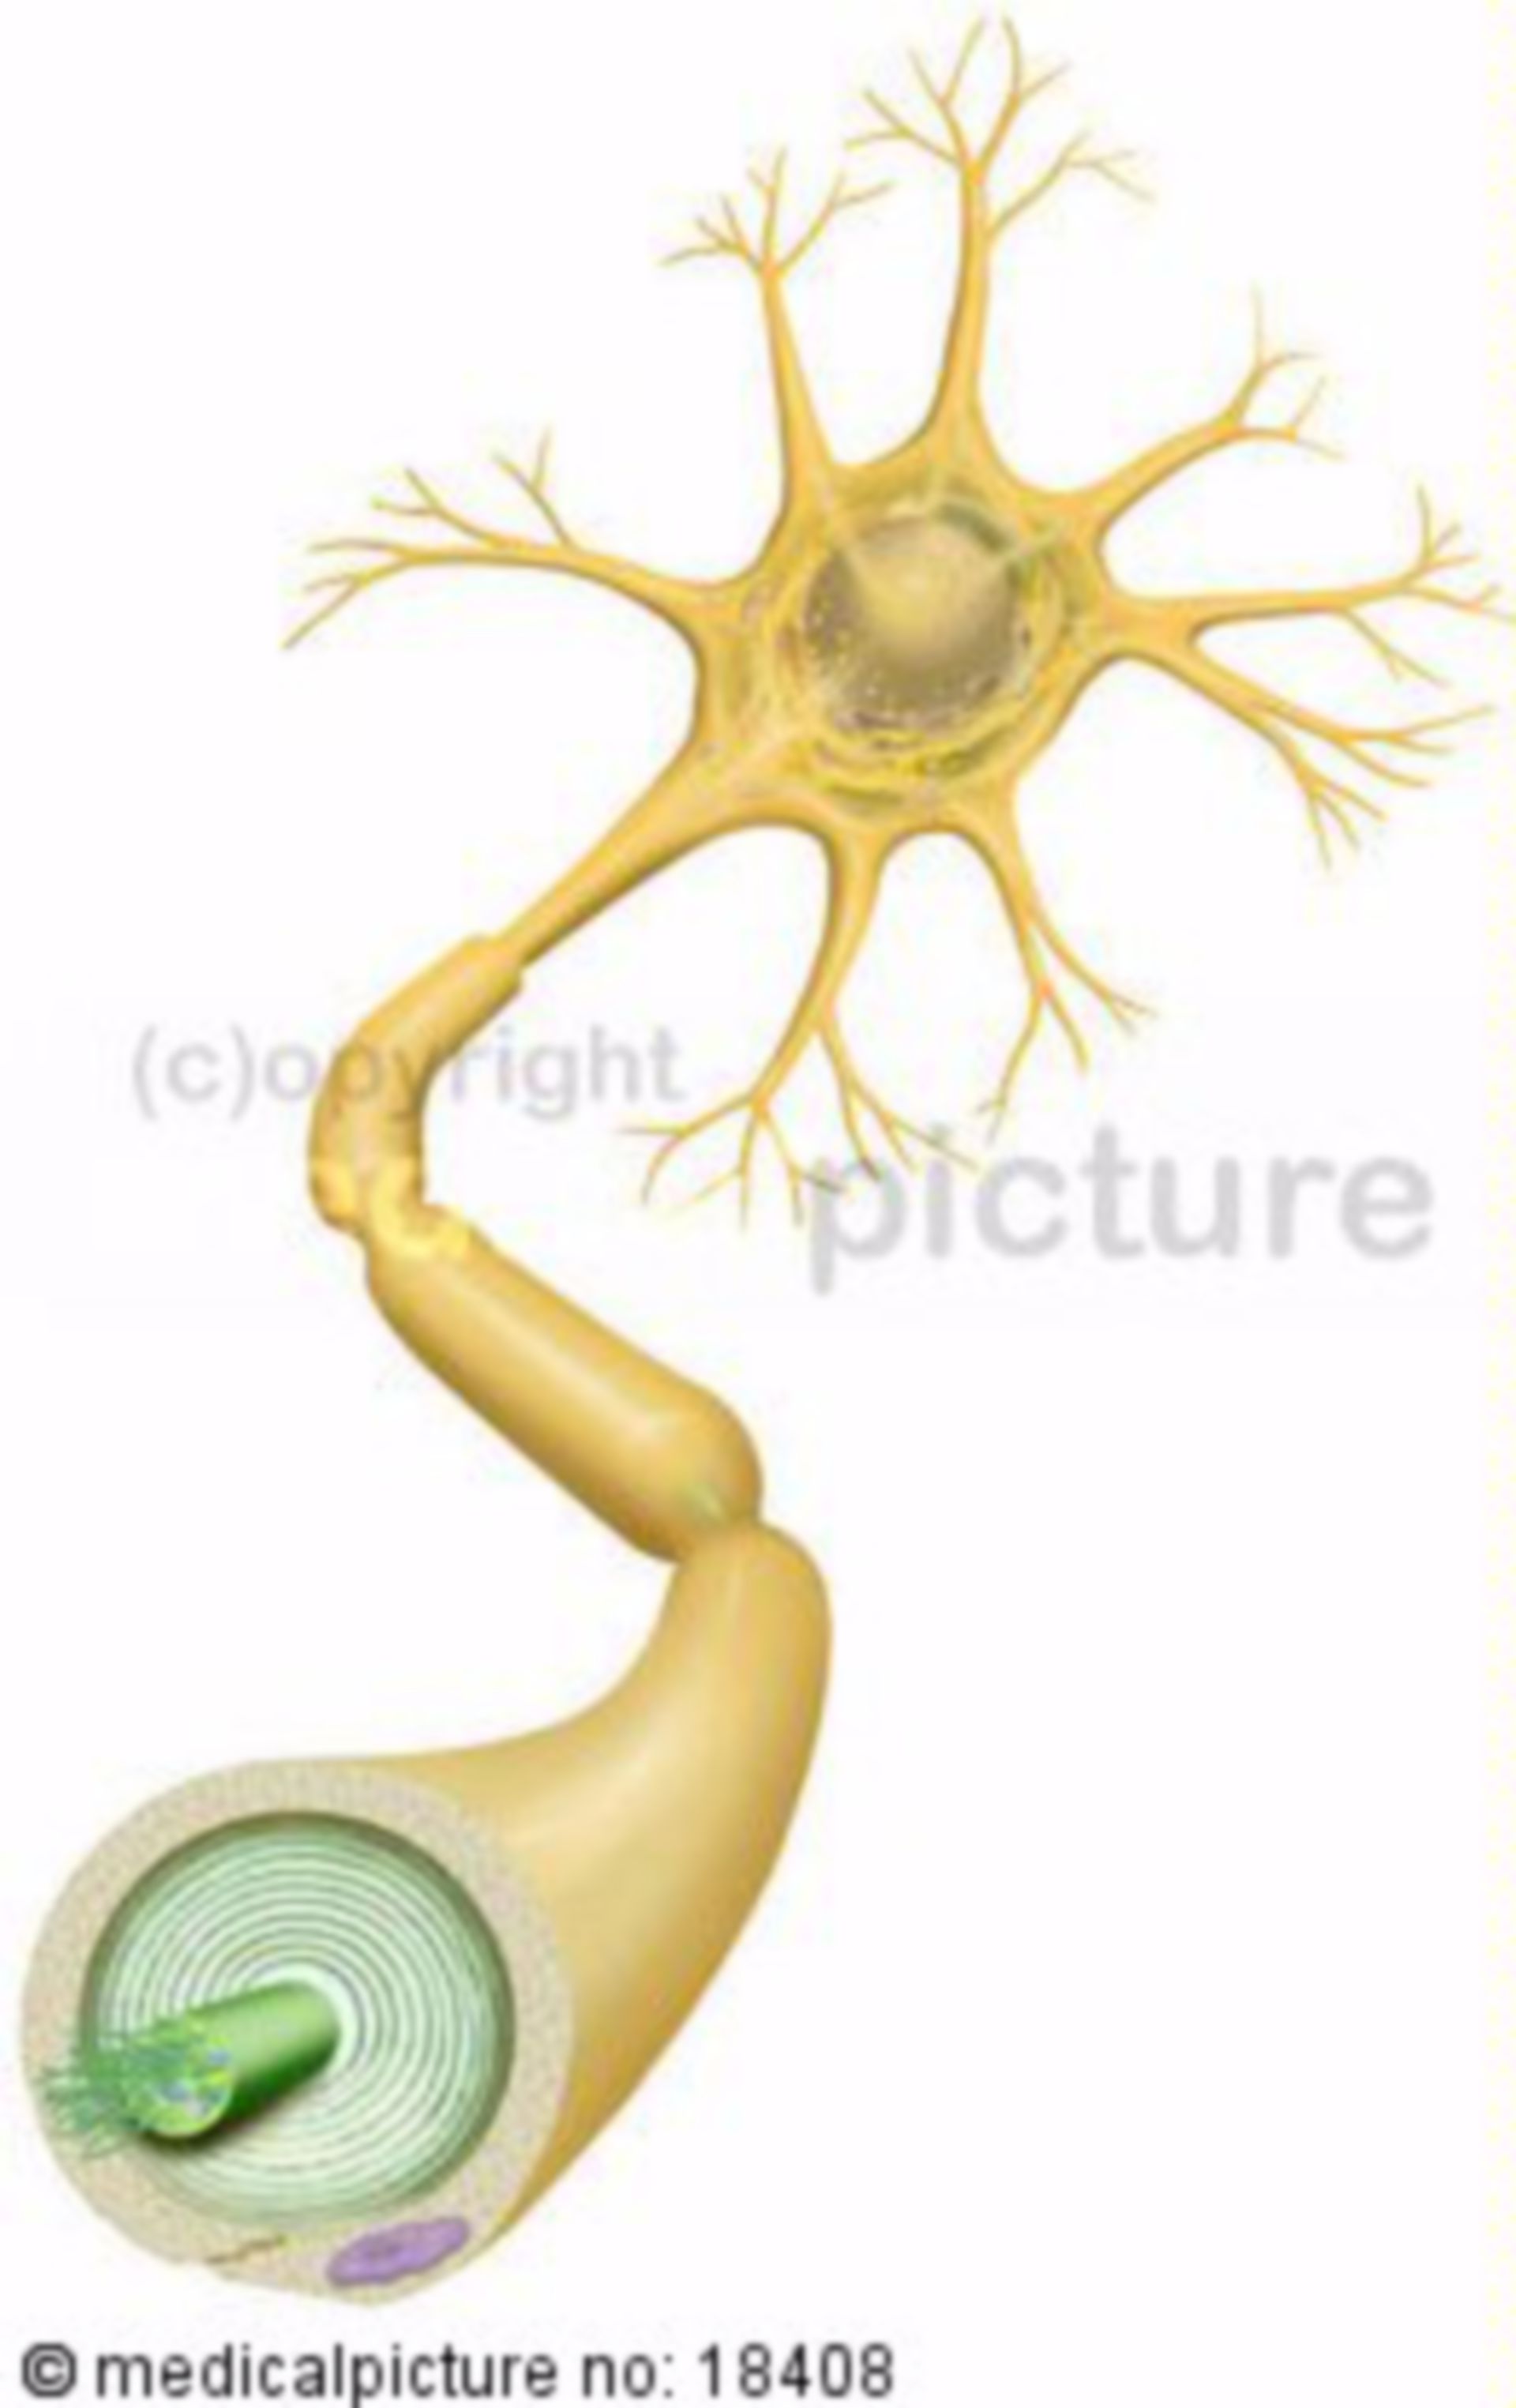 Multipolar nerve cell